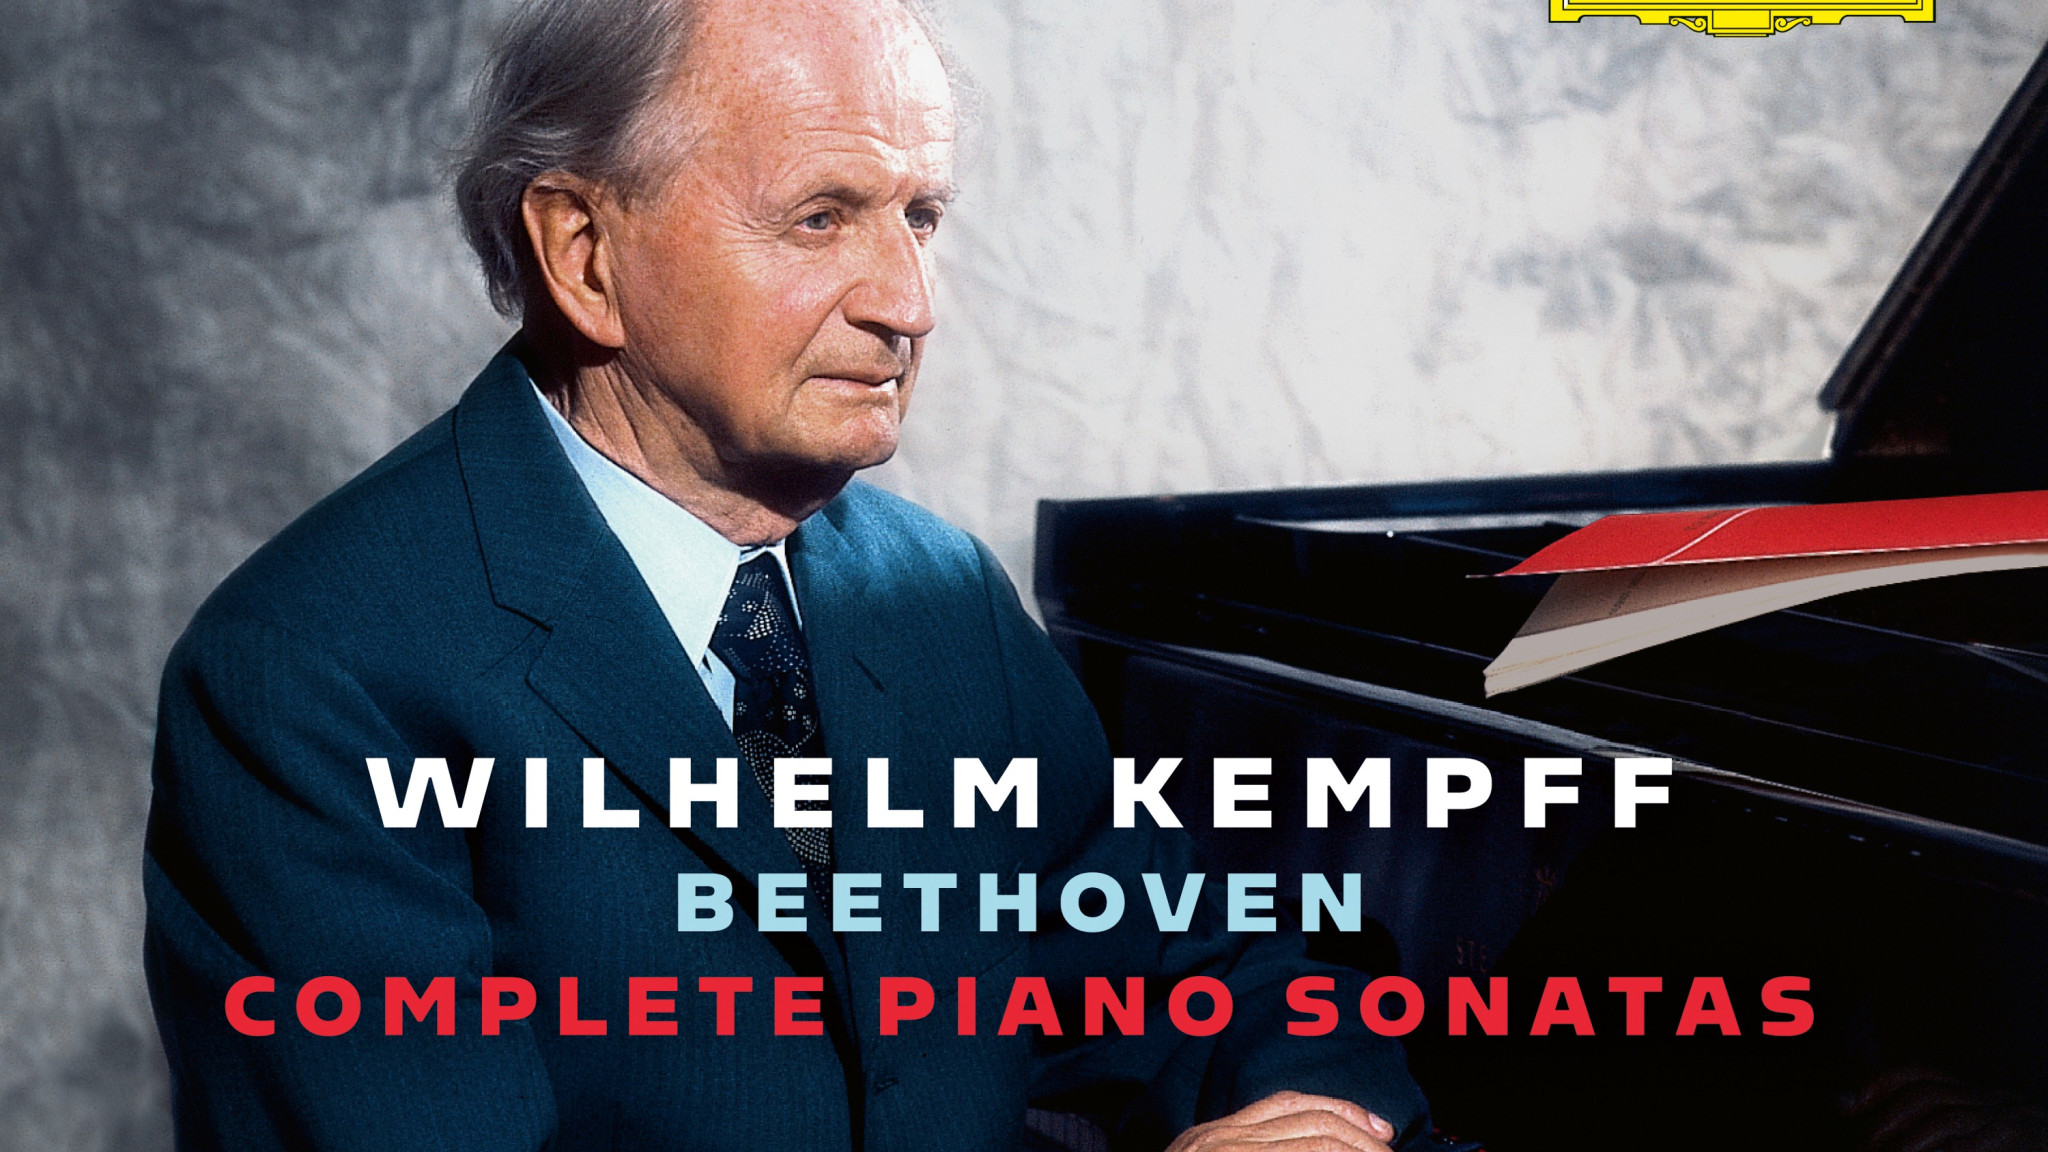 Kempff Beethoven Complete Piano Sonatas Beethoven 2020